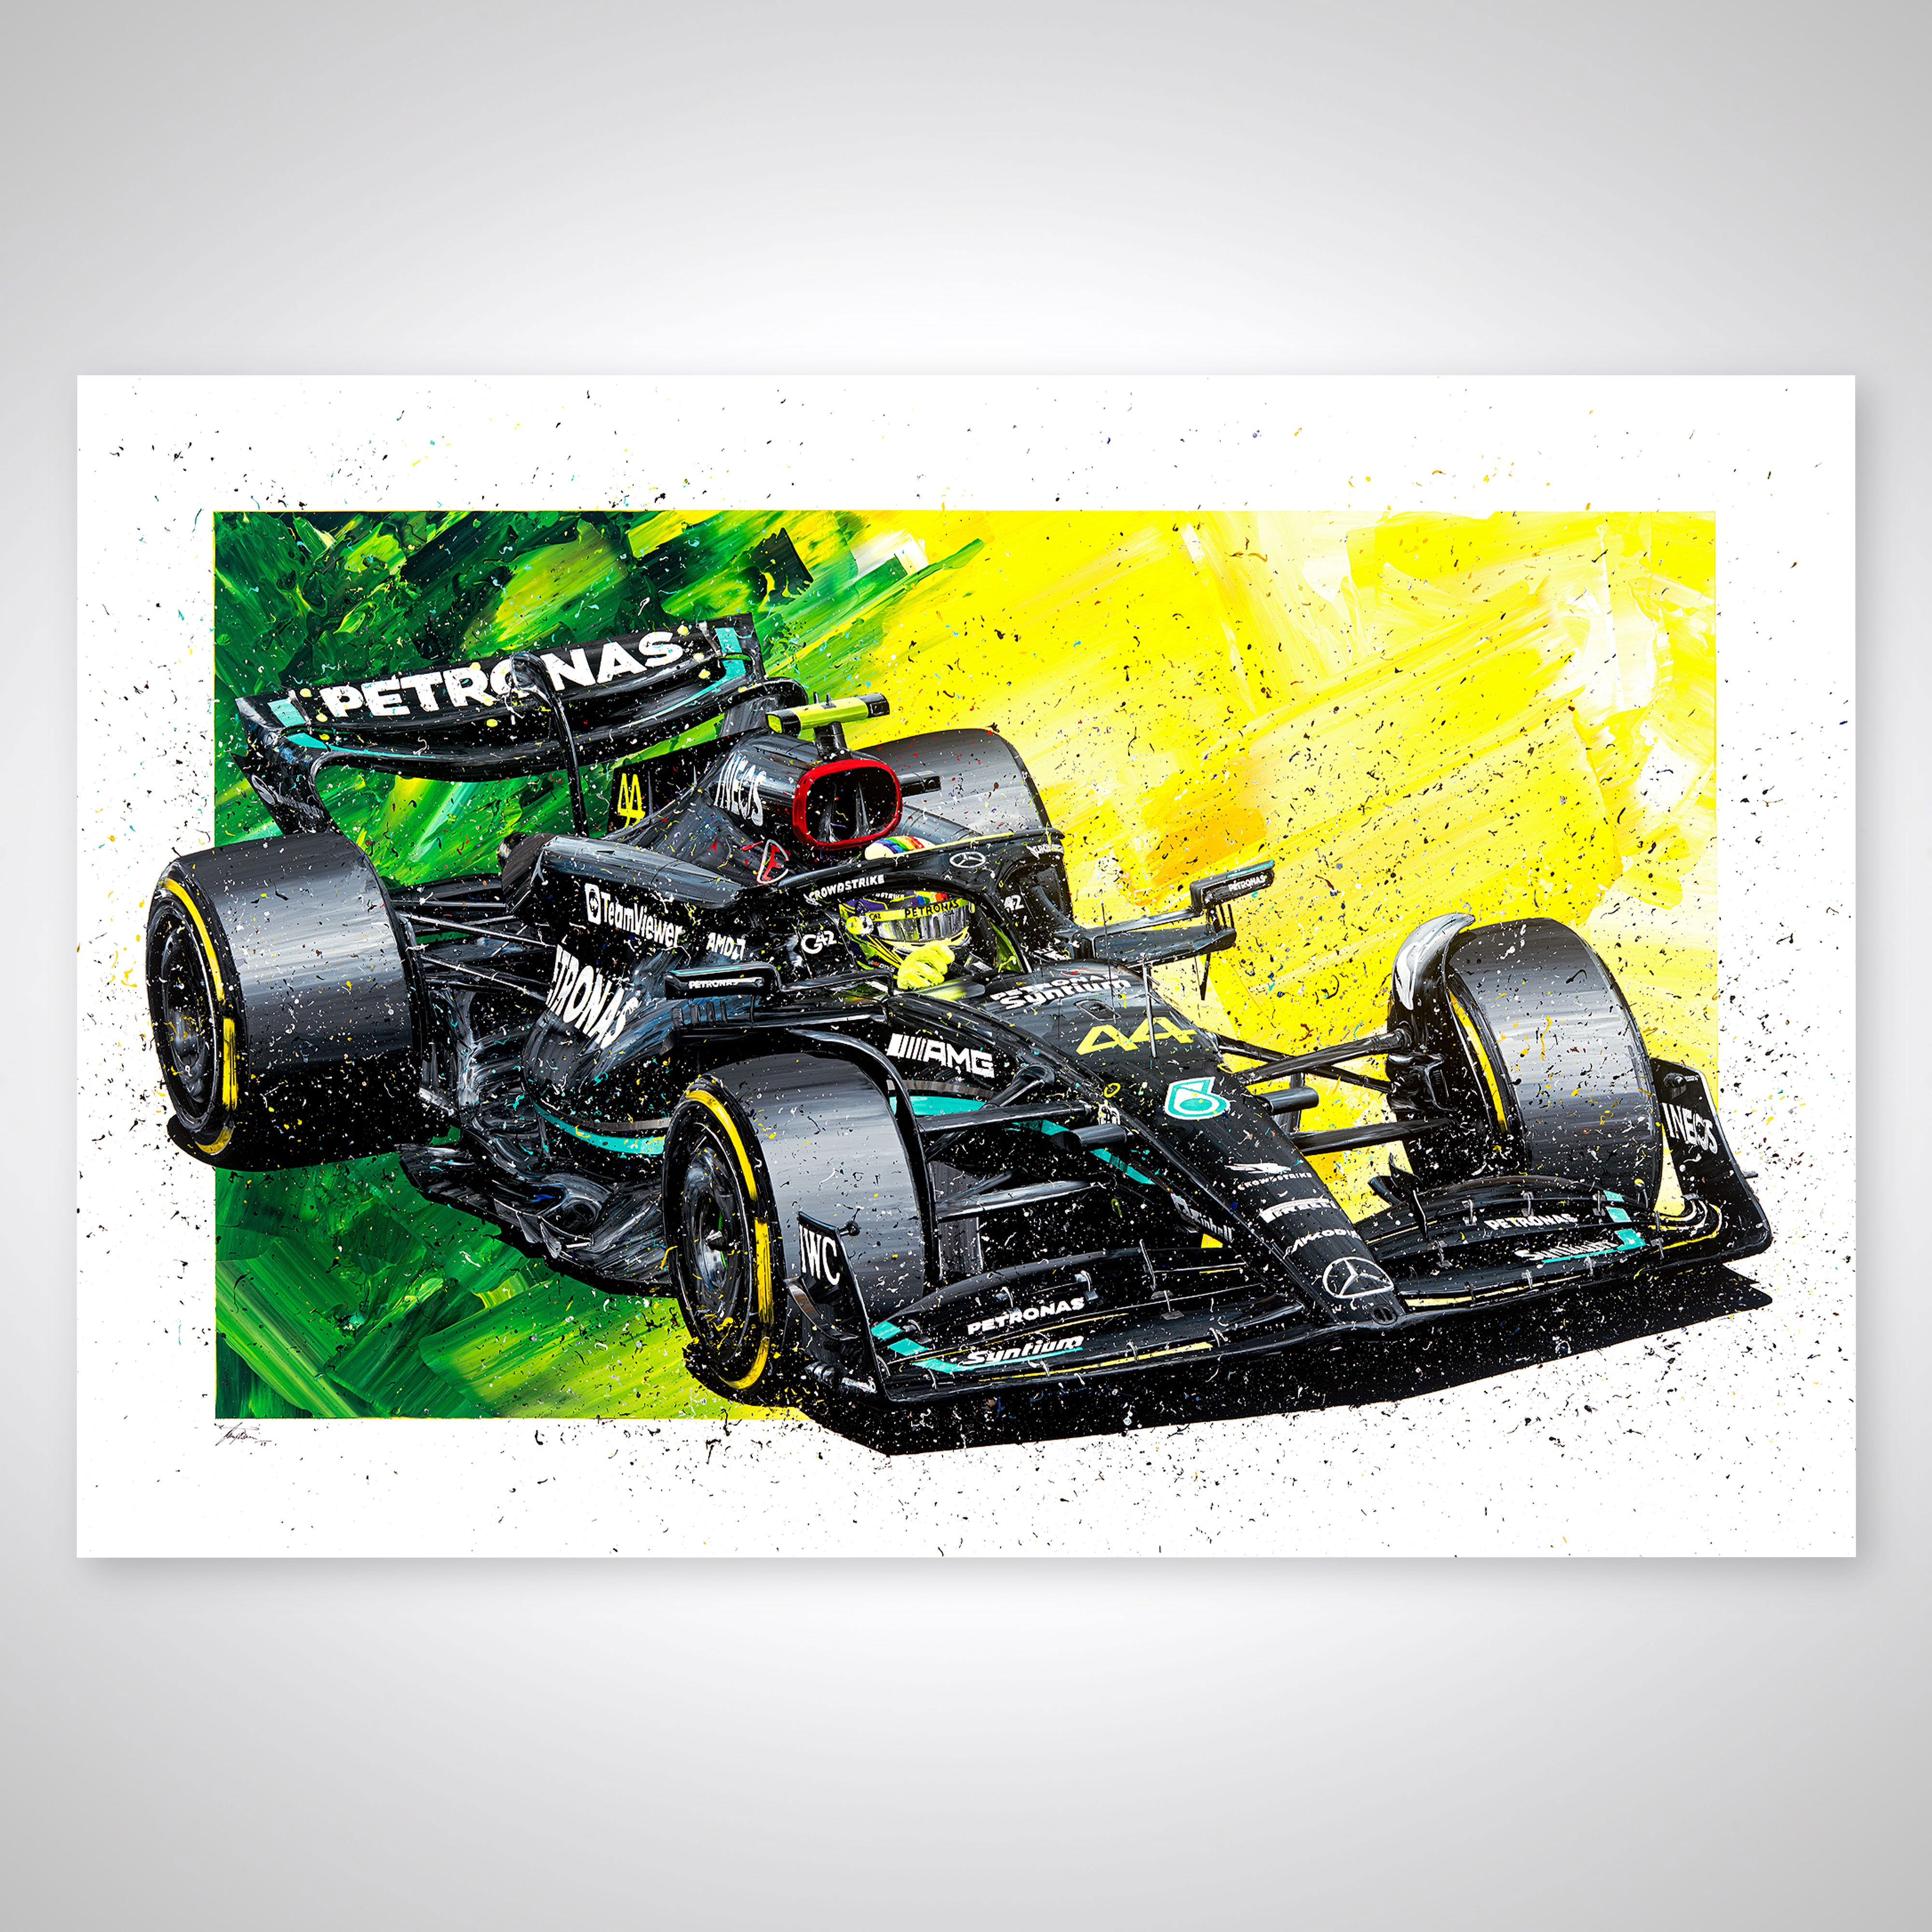 Lewis Hamilton Signed Photo Print Poster Formula One Mercedes Memorabilia